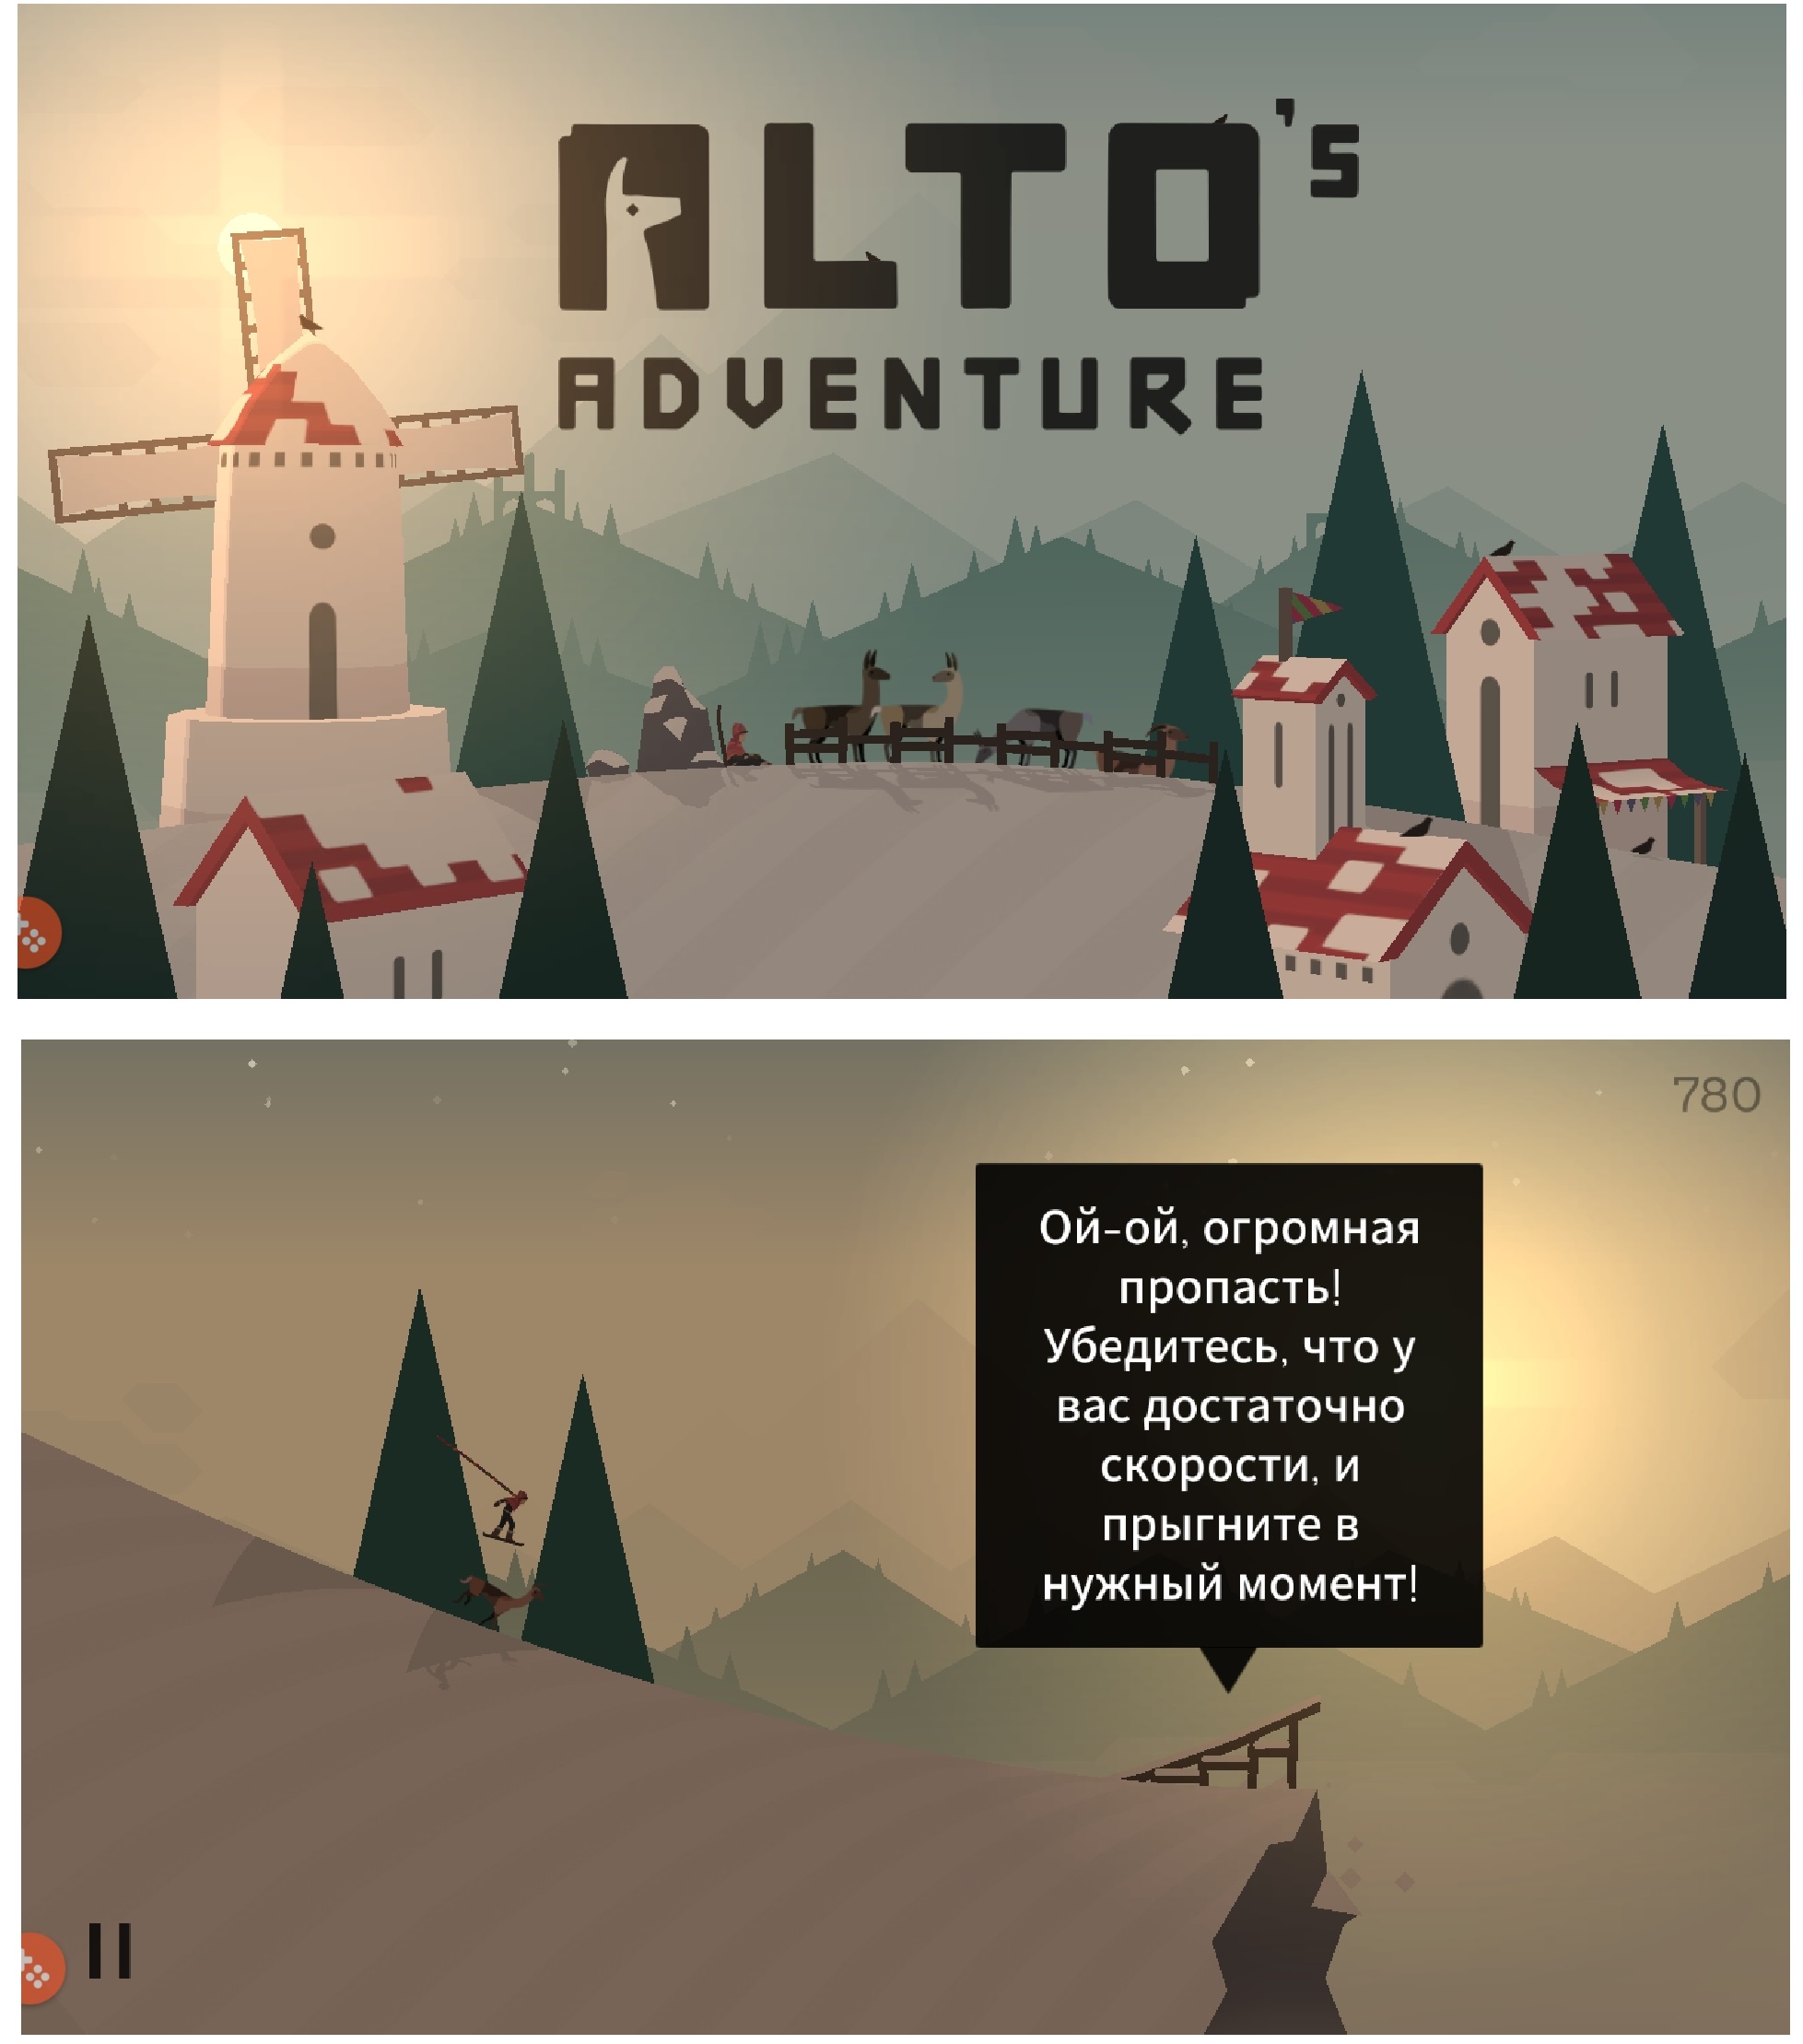 Alto’s Adventures